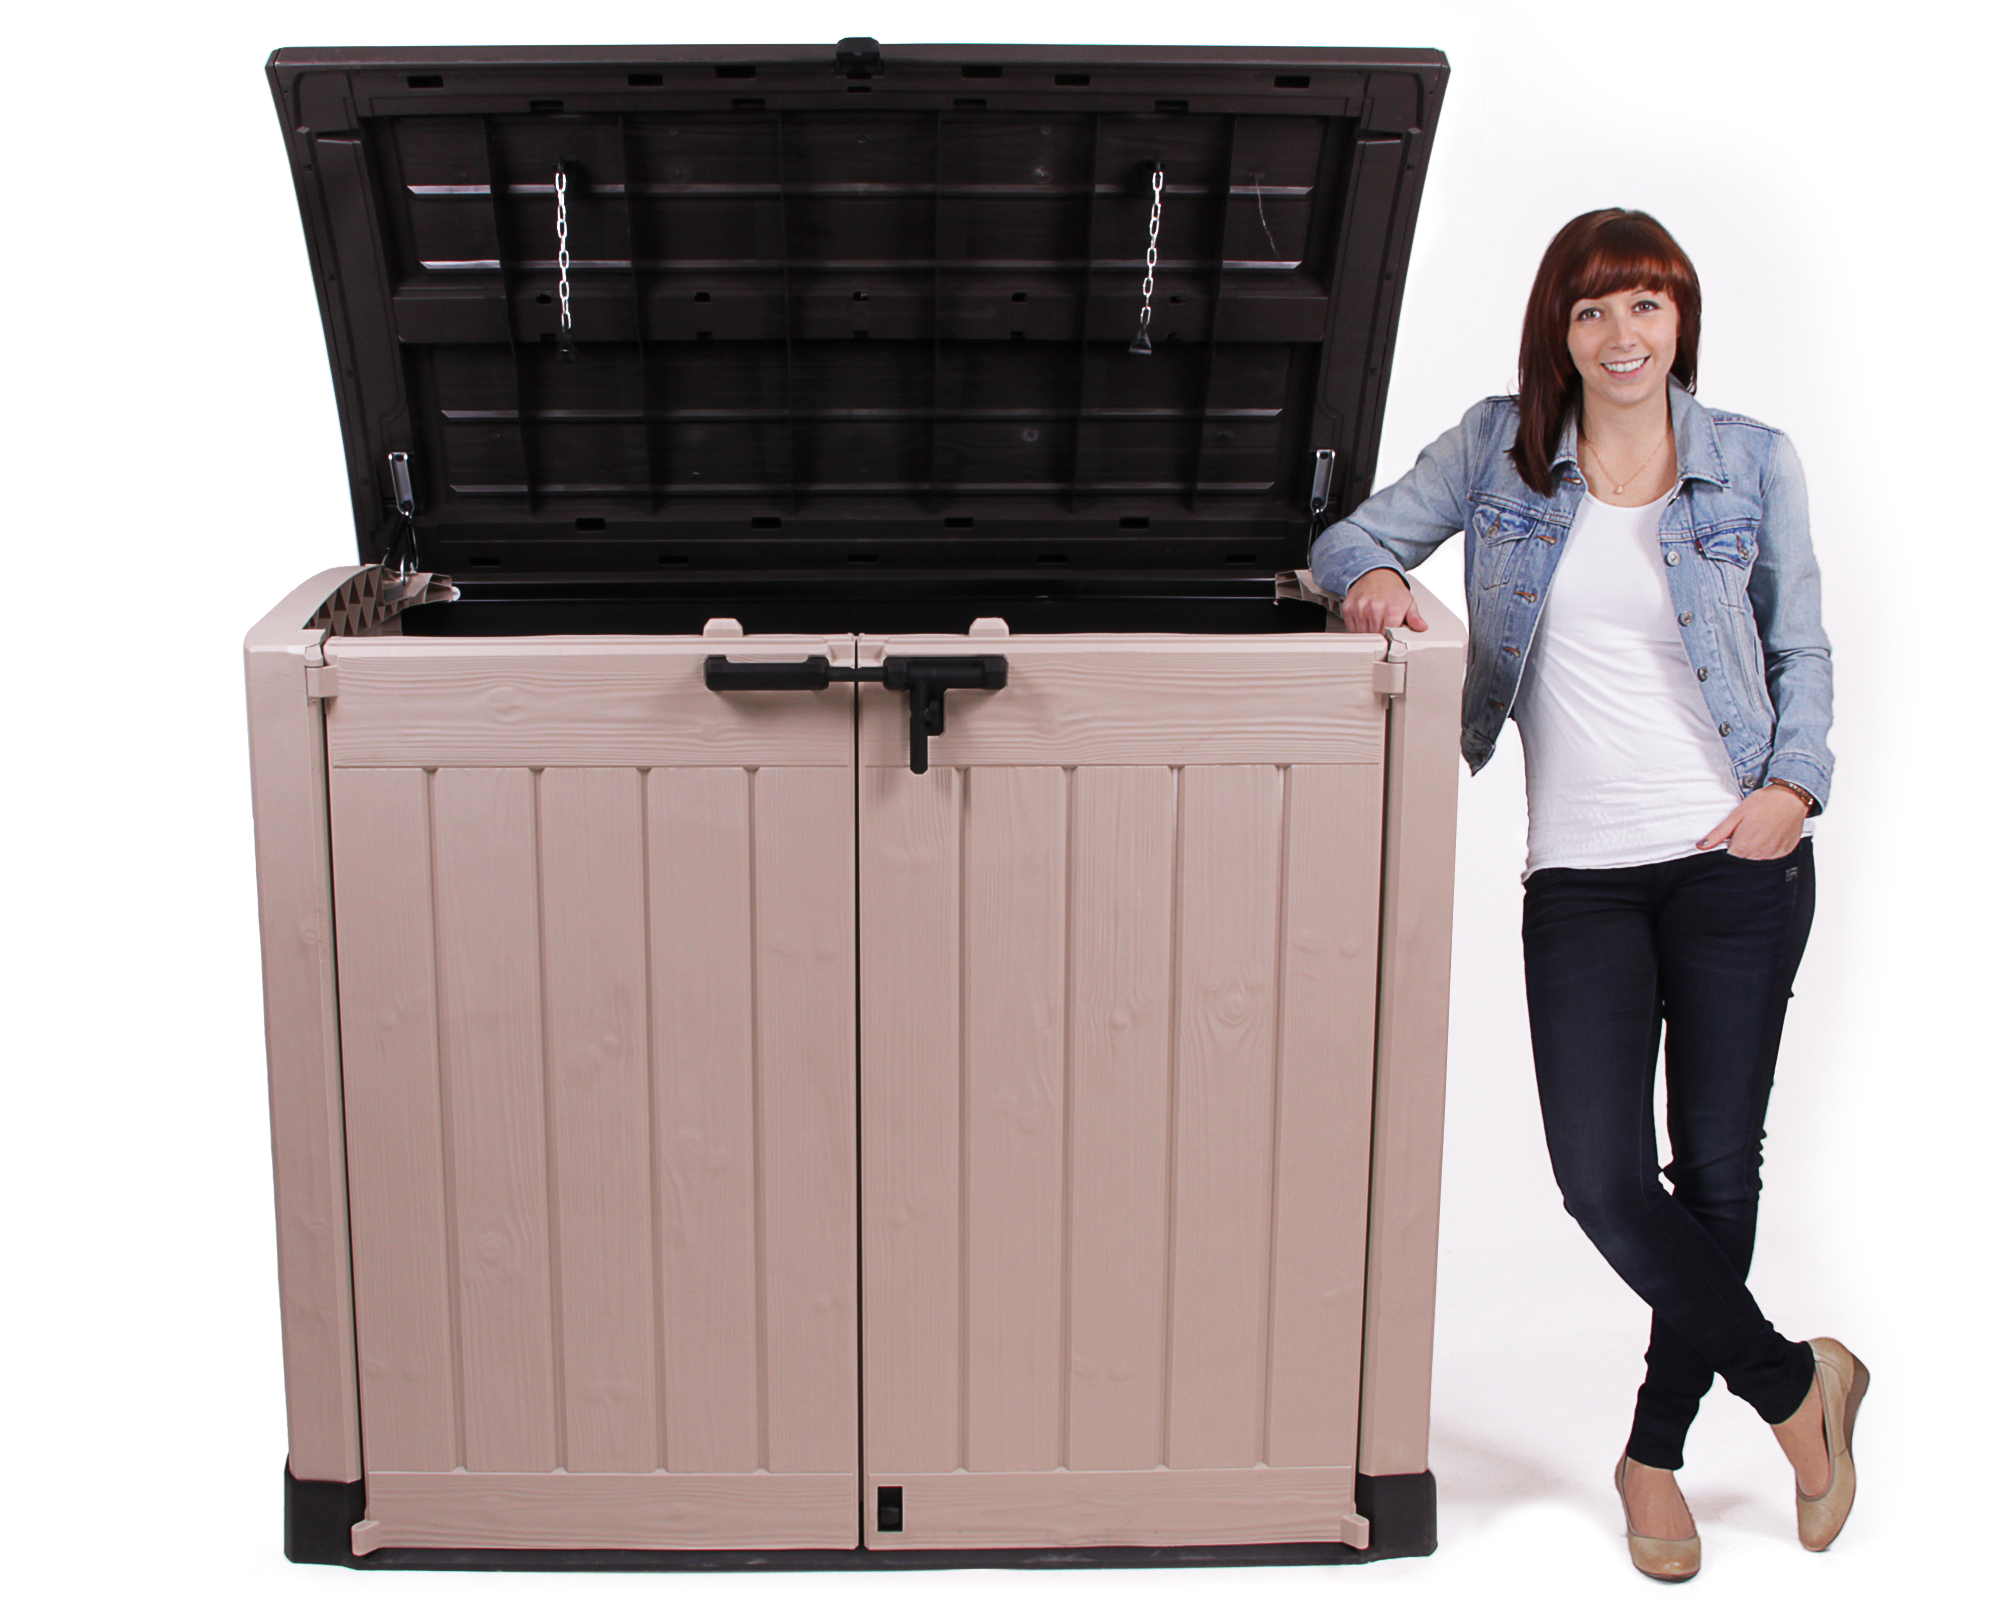 Ondis24 Keter Gerätebox Aufbewahrungsbox Mülltonnenbox Gartenbox grün beige MAX 